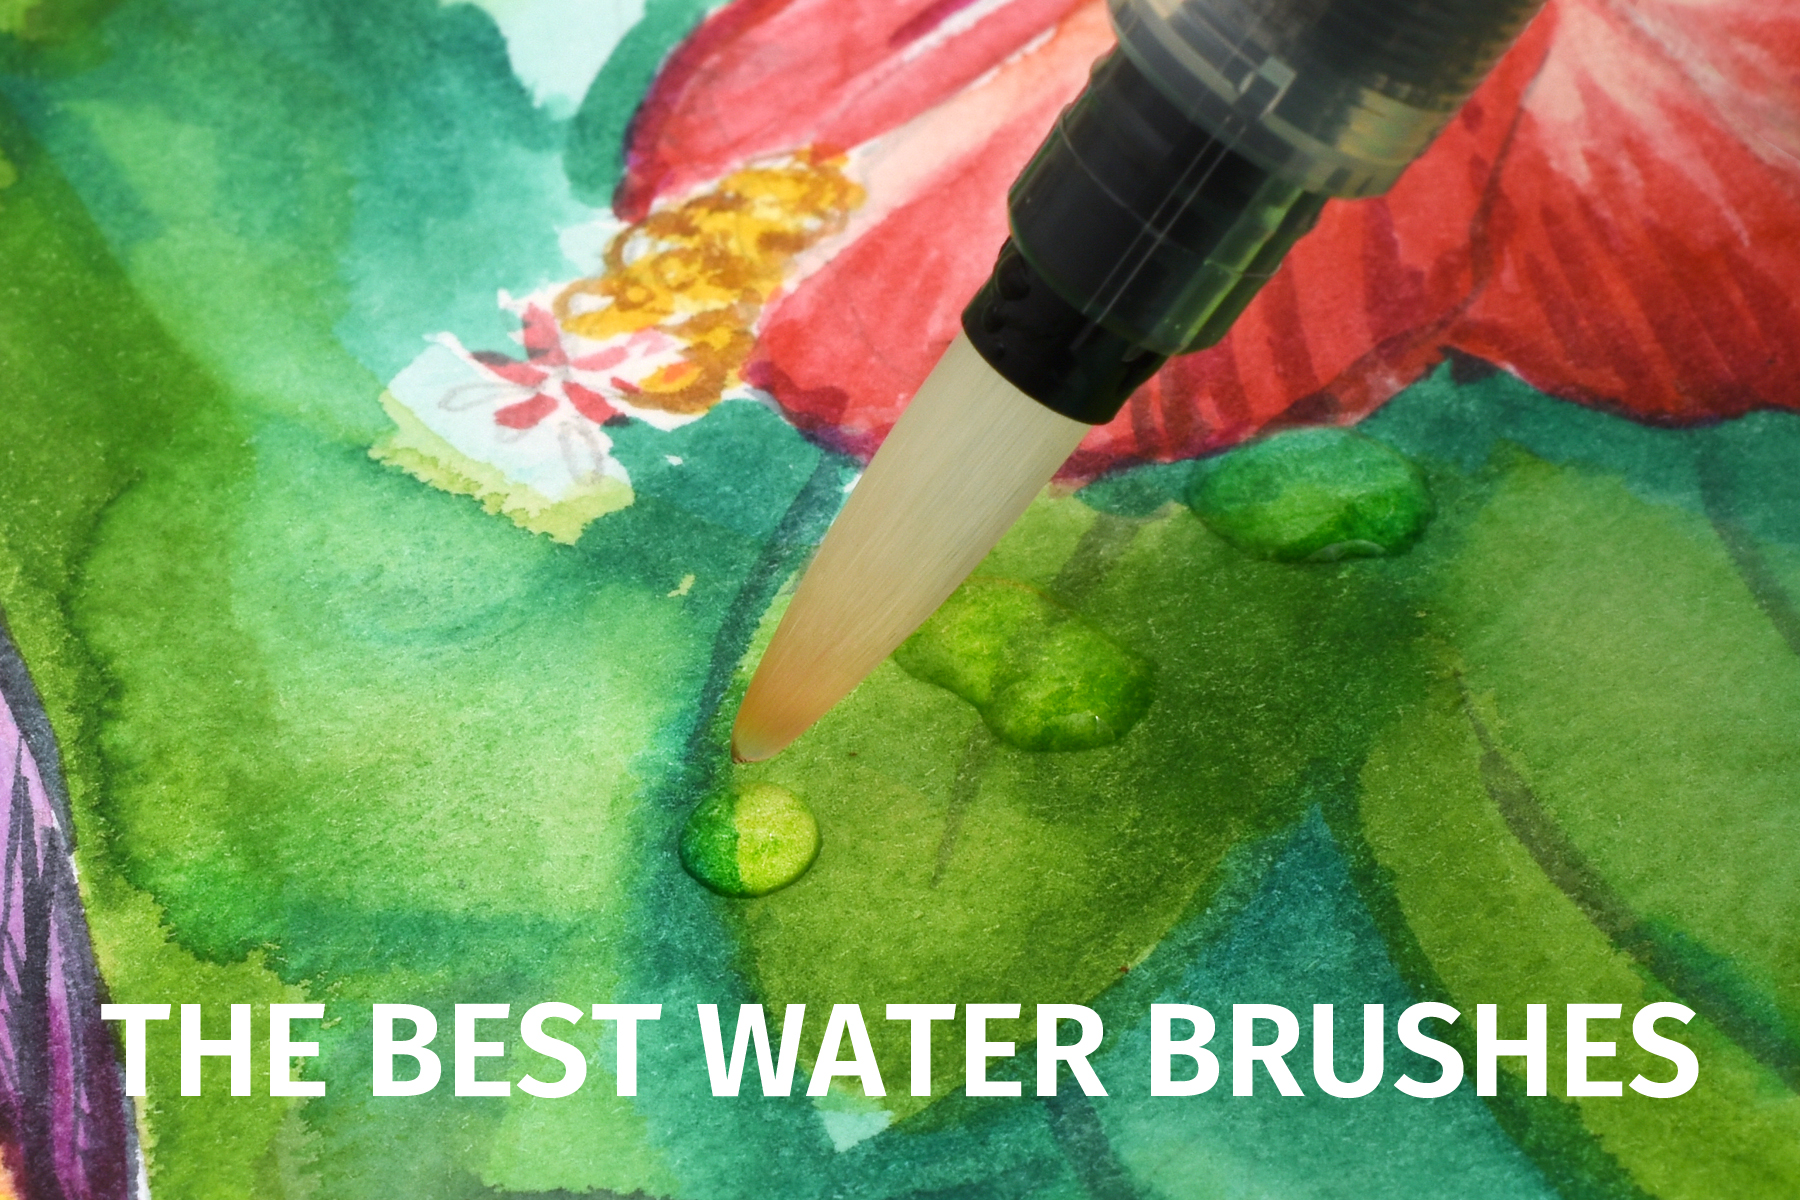 Bundle Deals Flat / Fine Tip Refillable Water Brushes Watercolor